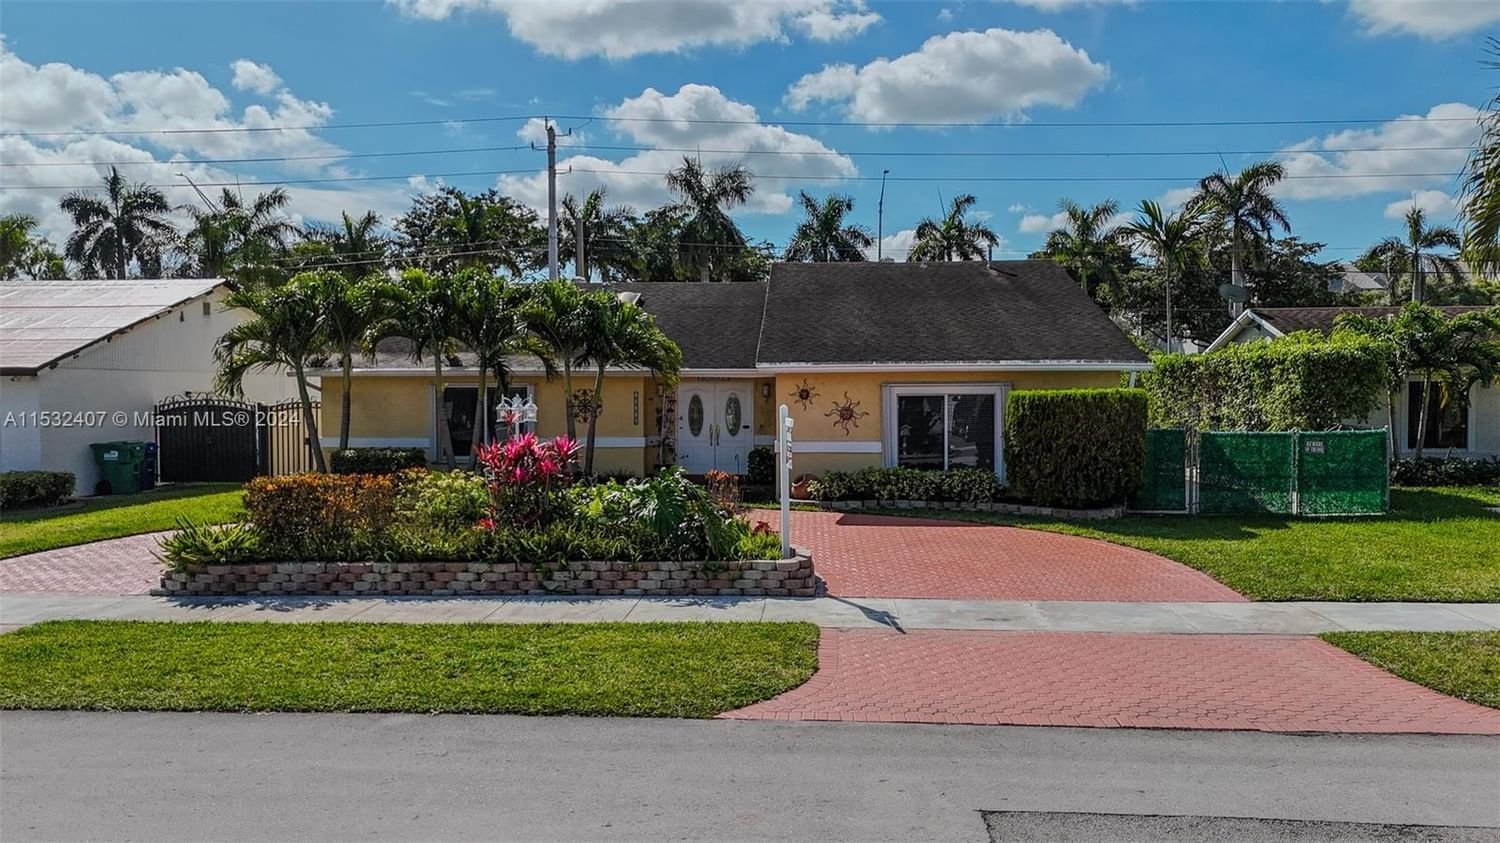 Real estate property located at 13216 87th Ter, Miami-Dade County, WINSTON PARK UNIT 8, Miami, FL